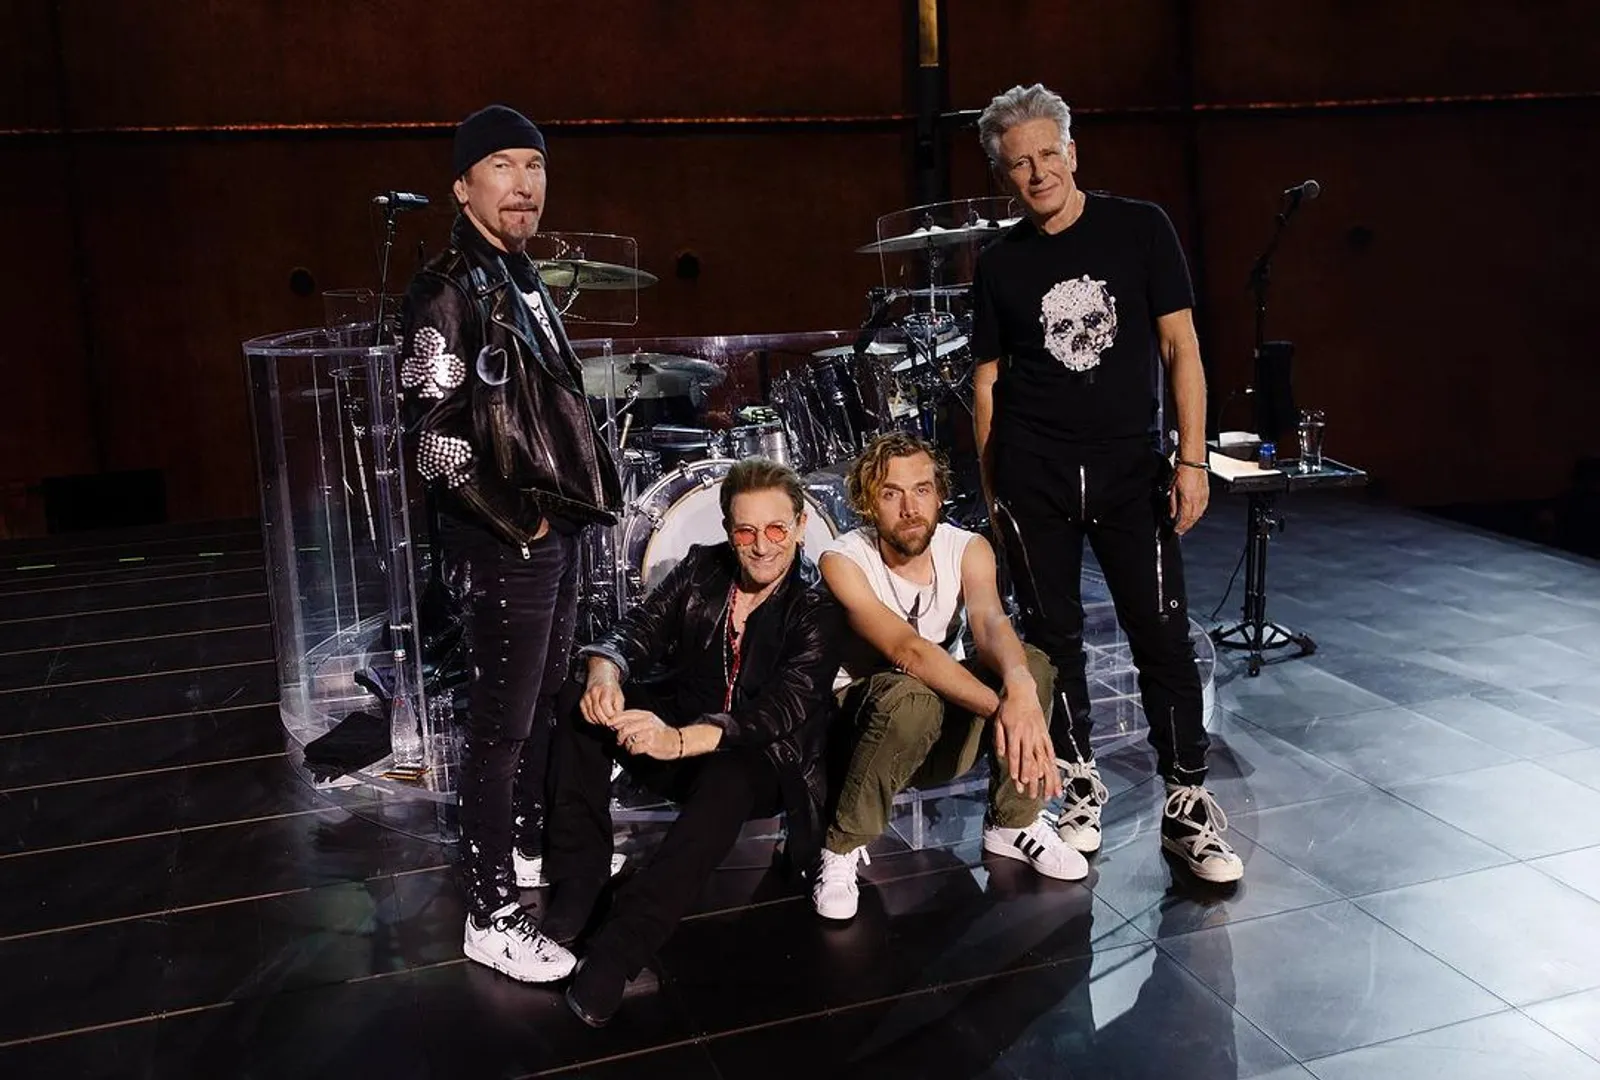 7 Potret Megahnya Konser U2 yang Pakai Venue Sphere Vegas